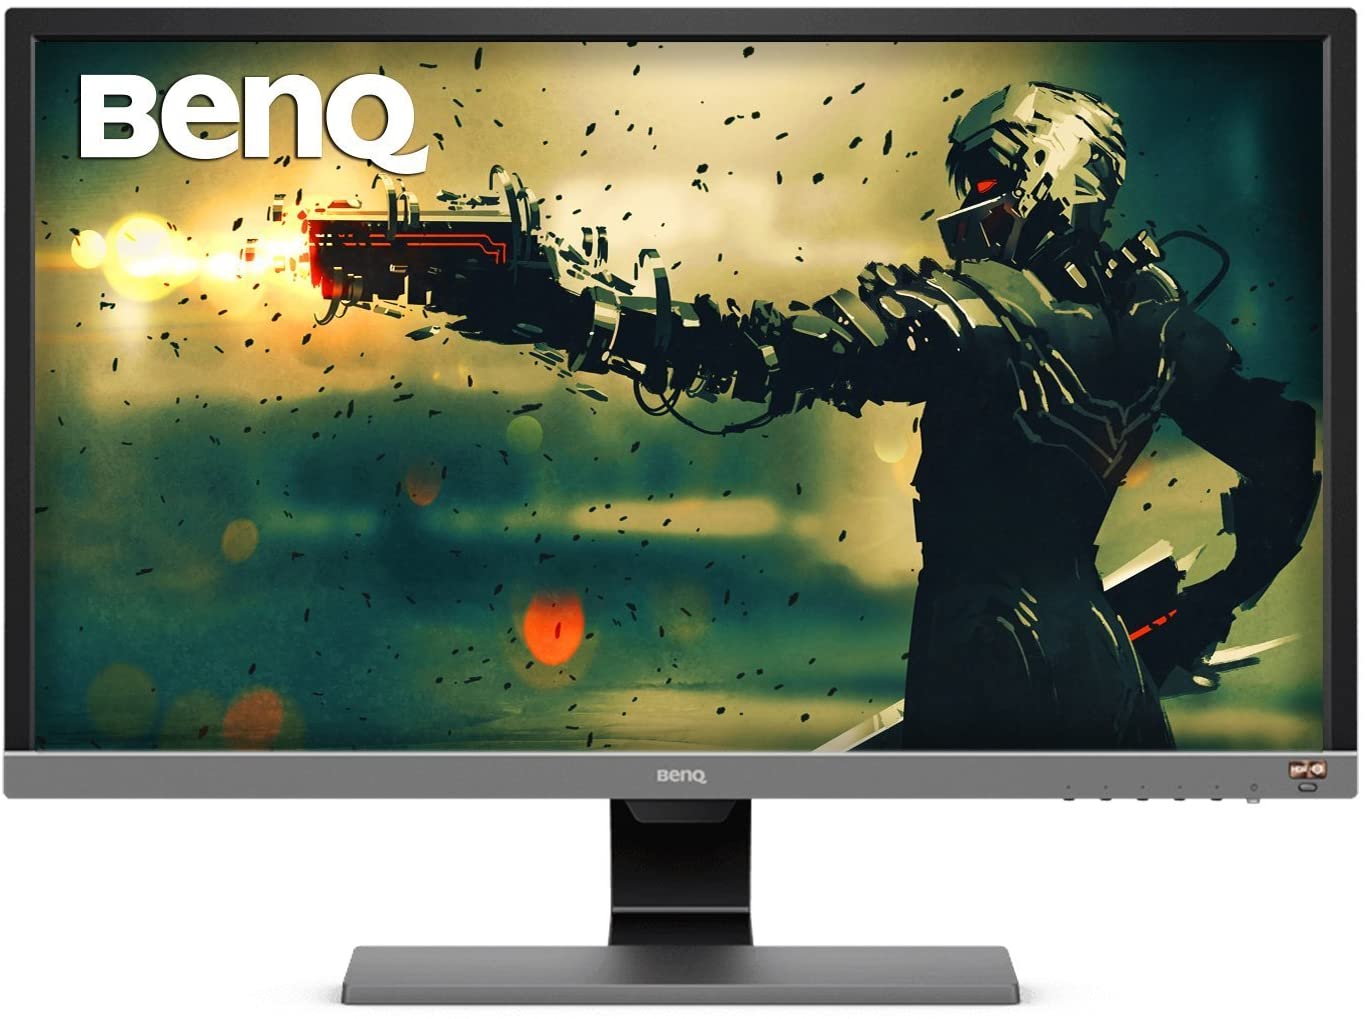 BenQ - best monitor for GTX 1080 Ti